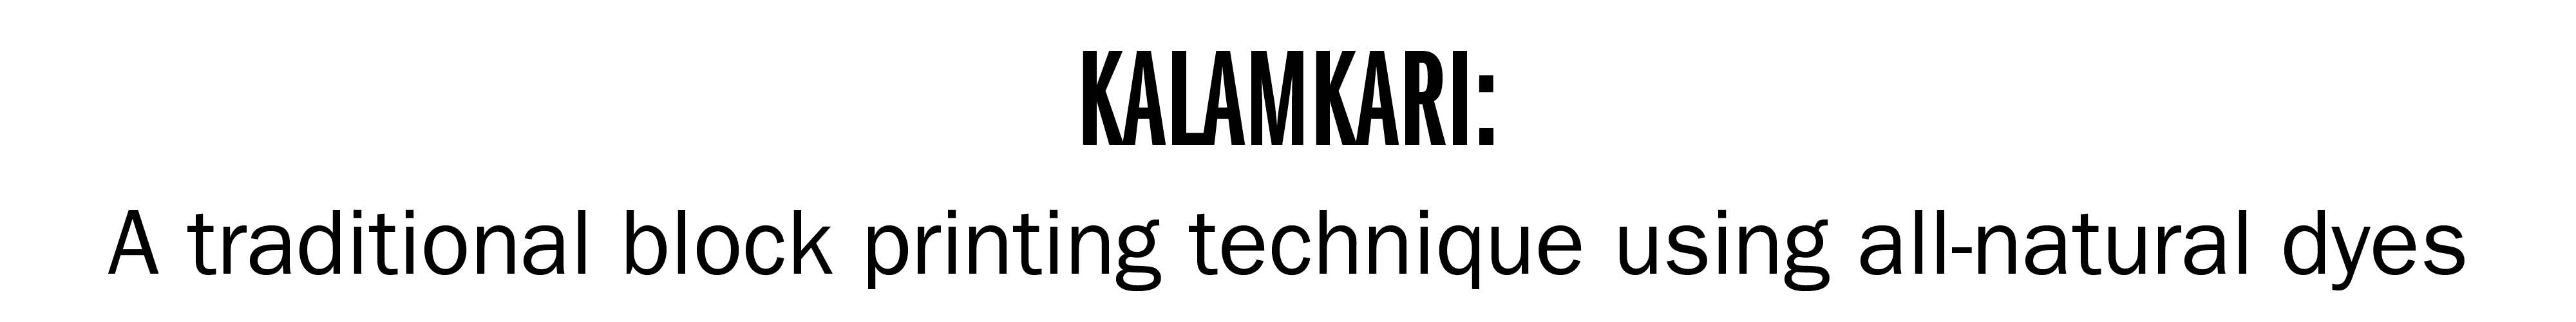 KALAMKARI: A traditional block printing technique using all-natural dyes